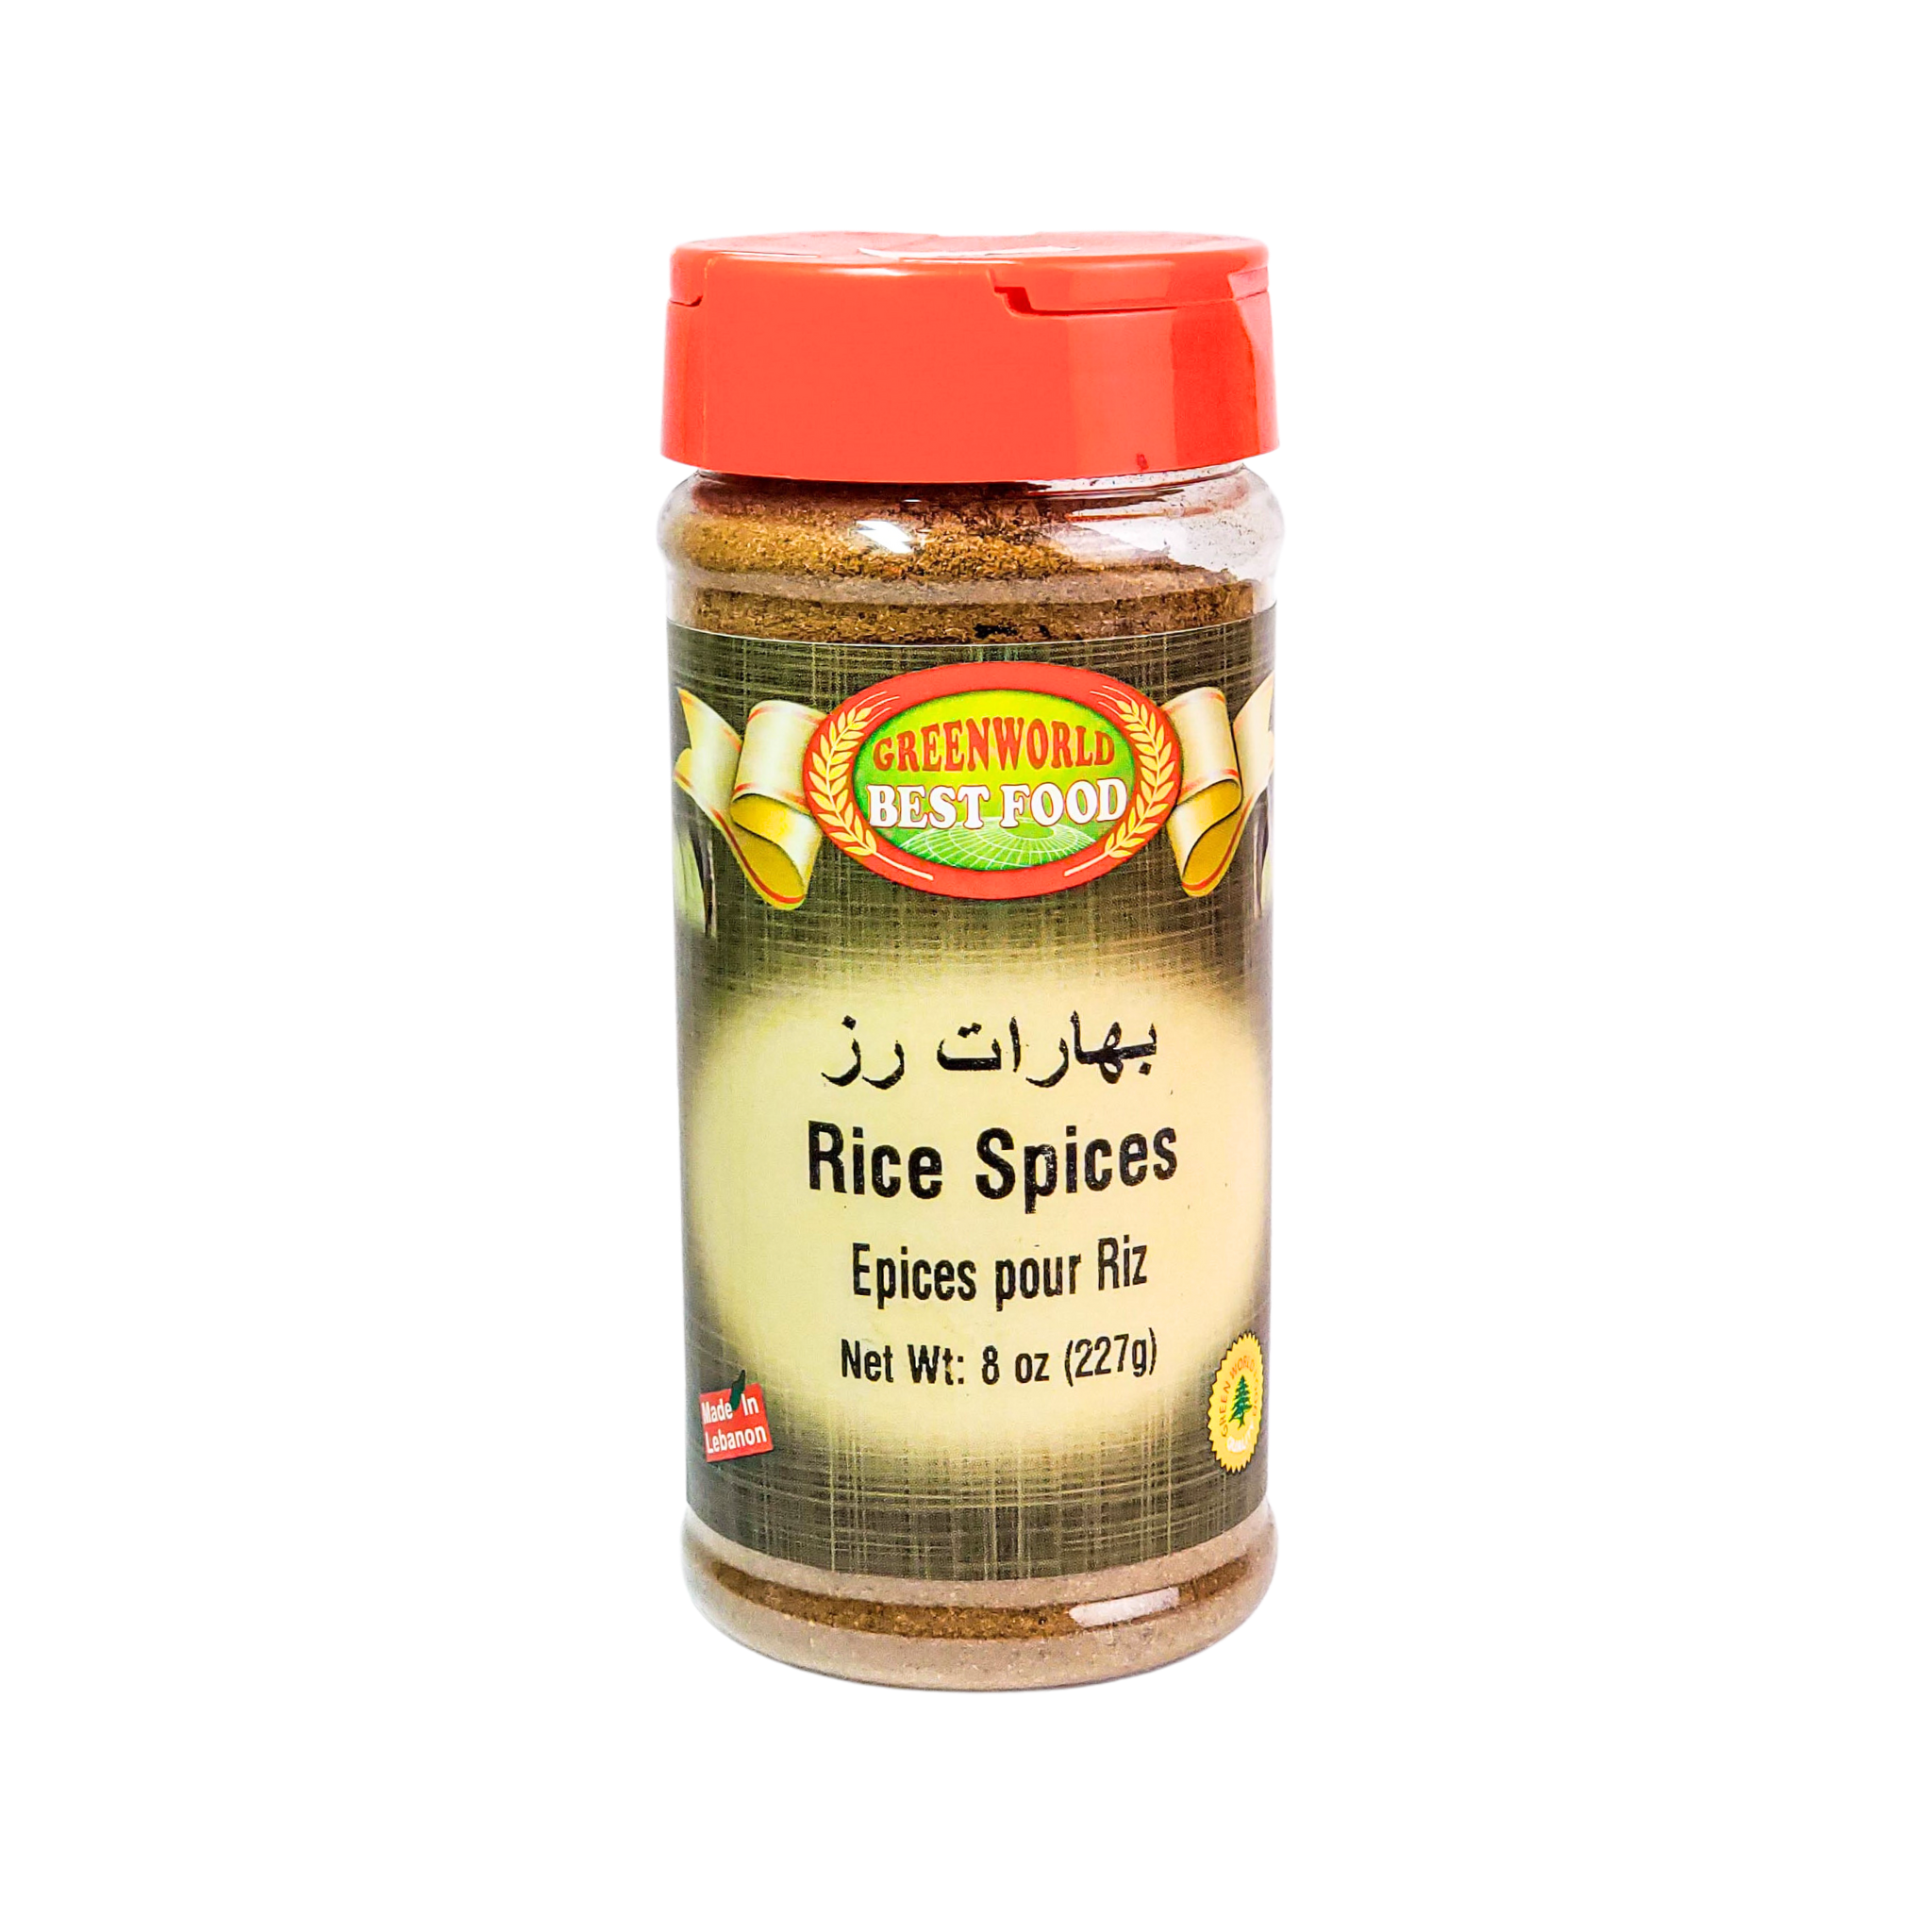 Greenworld Bestfood (Rice Spices/Epices pour Riz) 227g